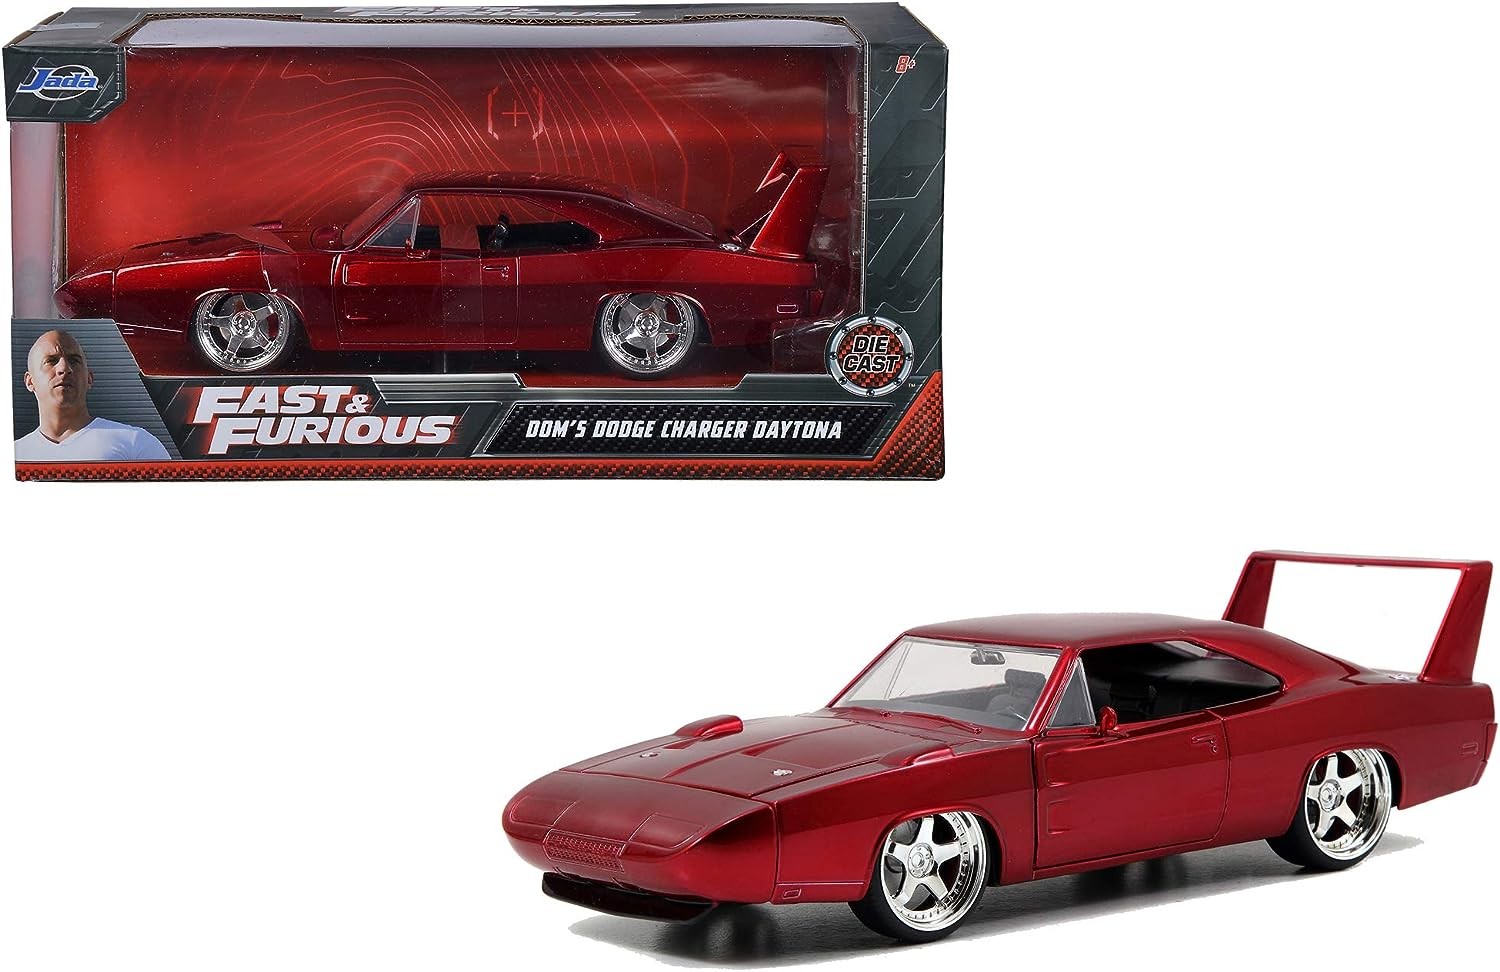 Jada Toys Fast & Furious Dom's Dodge Charger Daytona